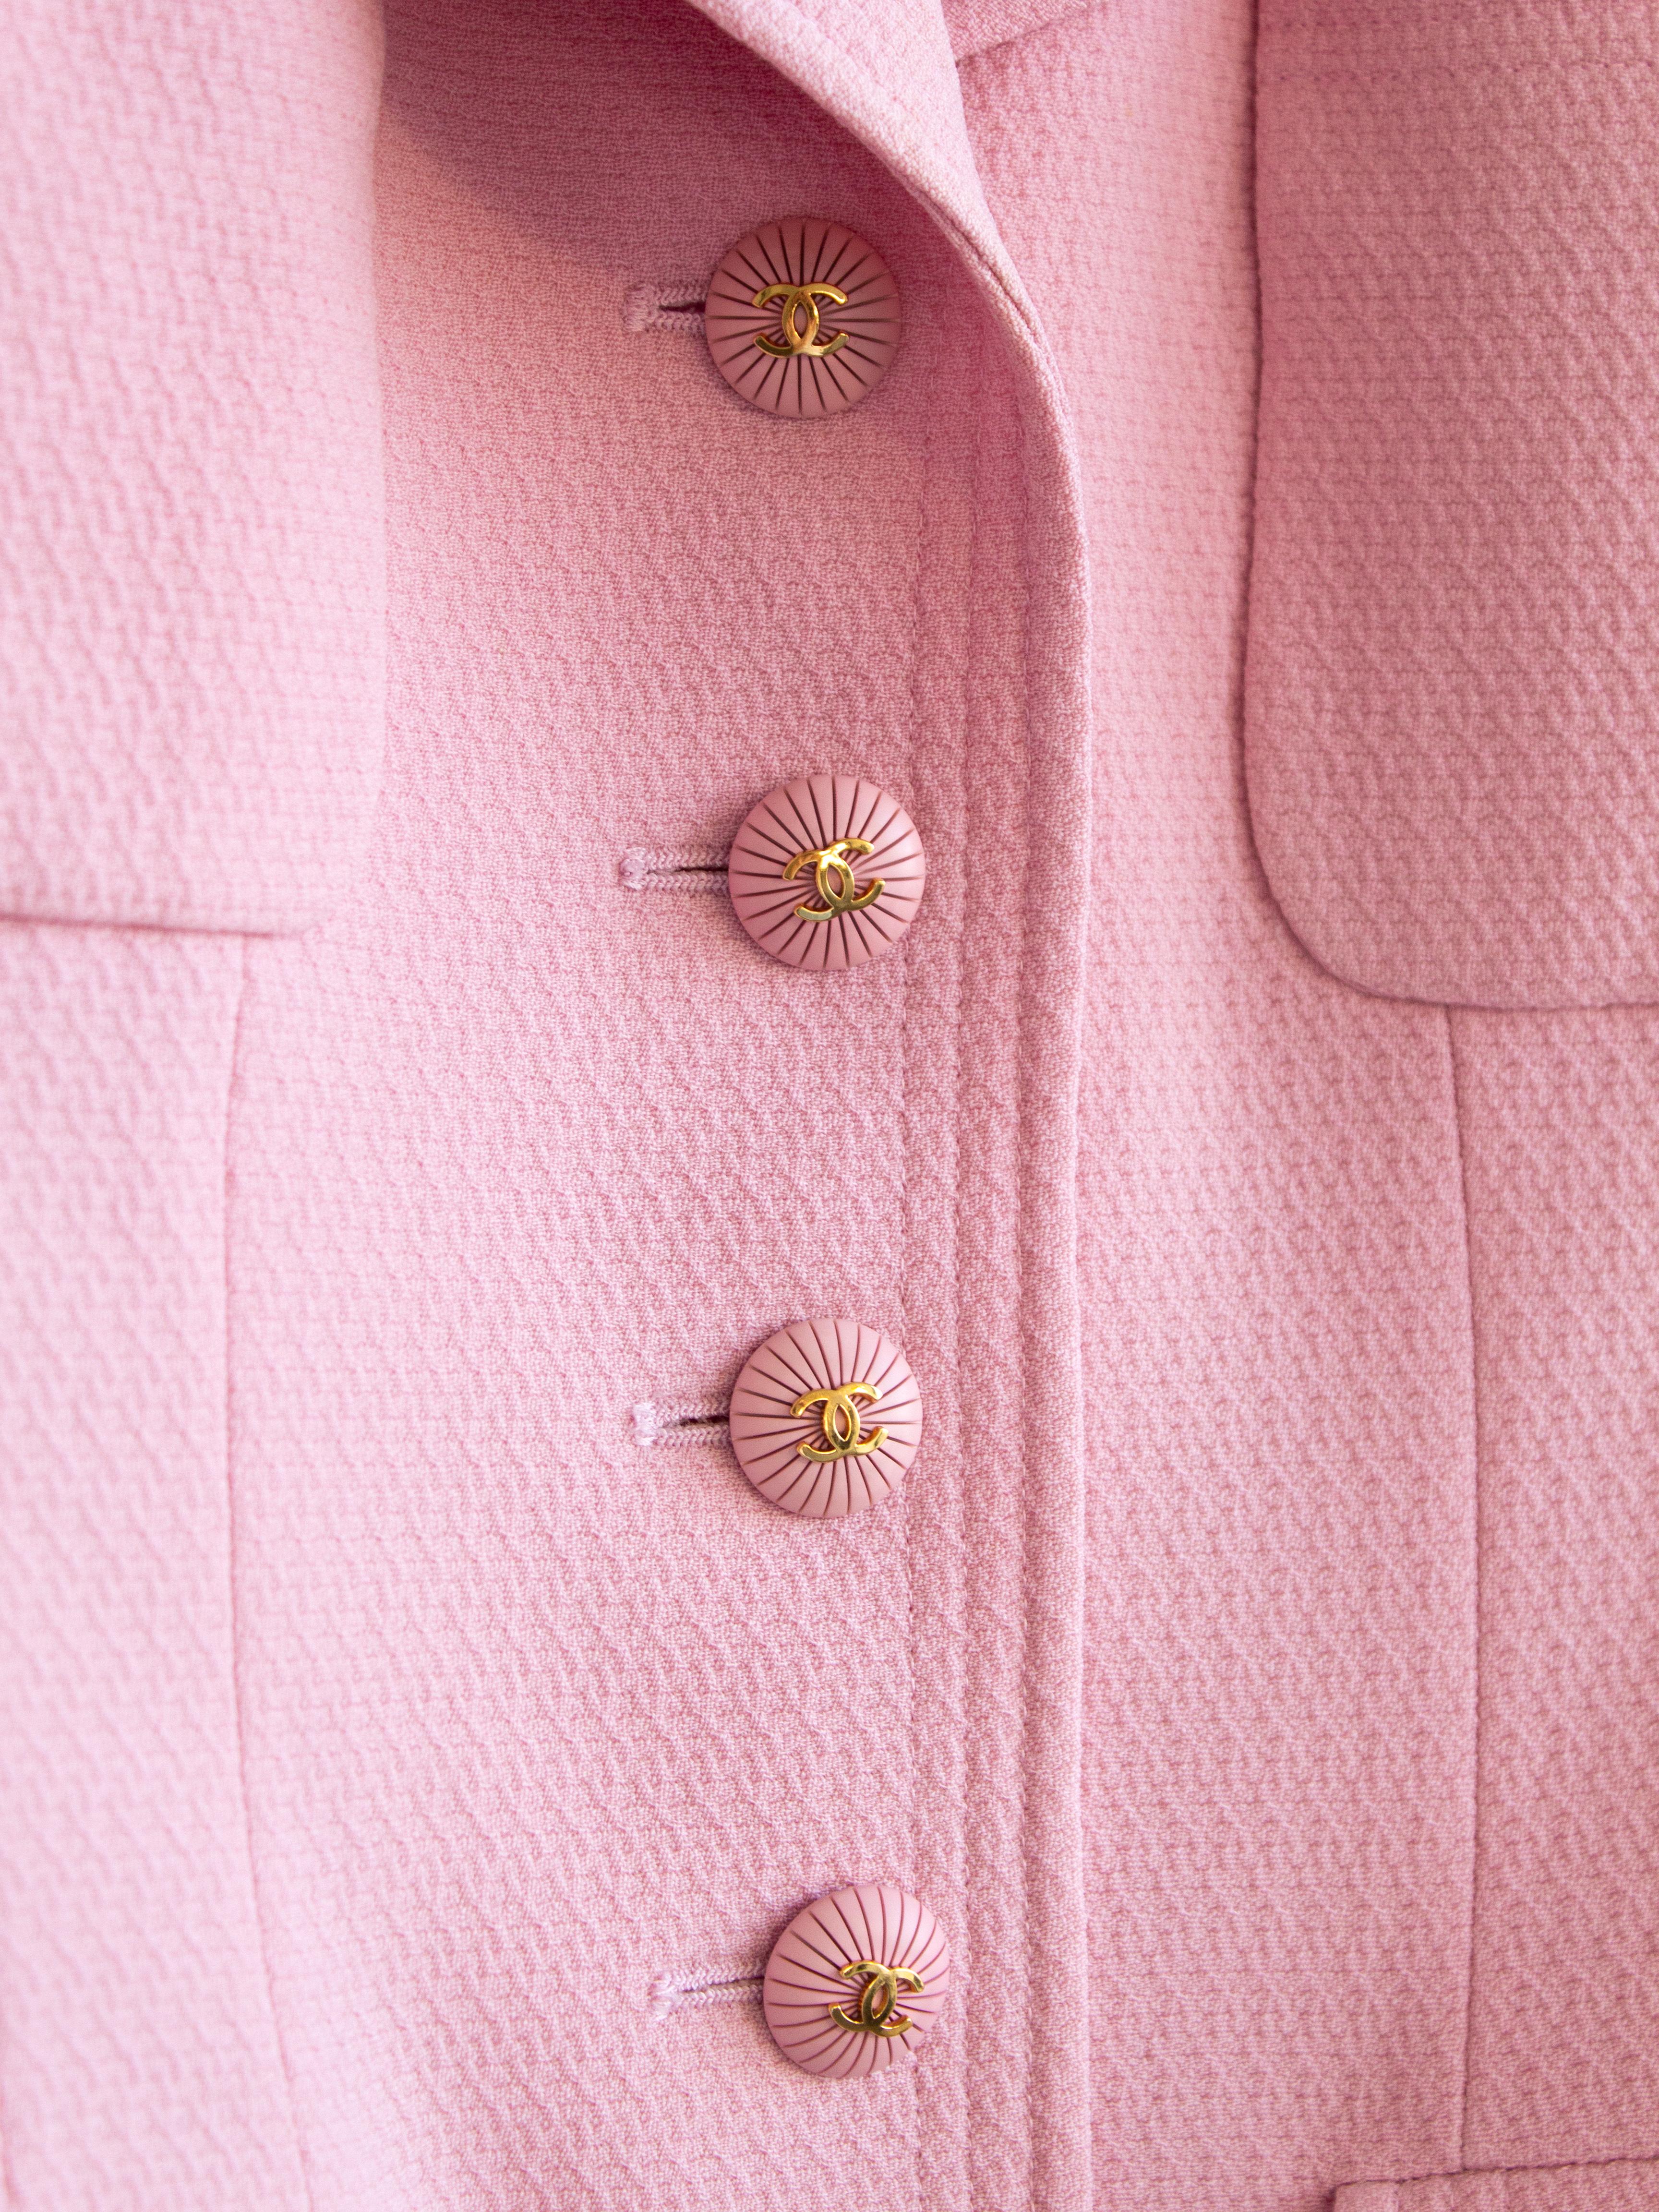 Women's Chanel Vintage S/S 1993 Pink Cotton CC Short Sleeve 93P Jacket